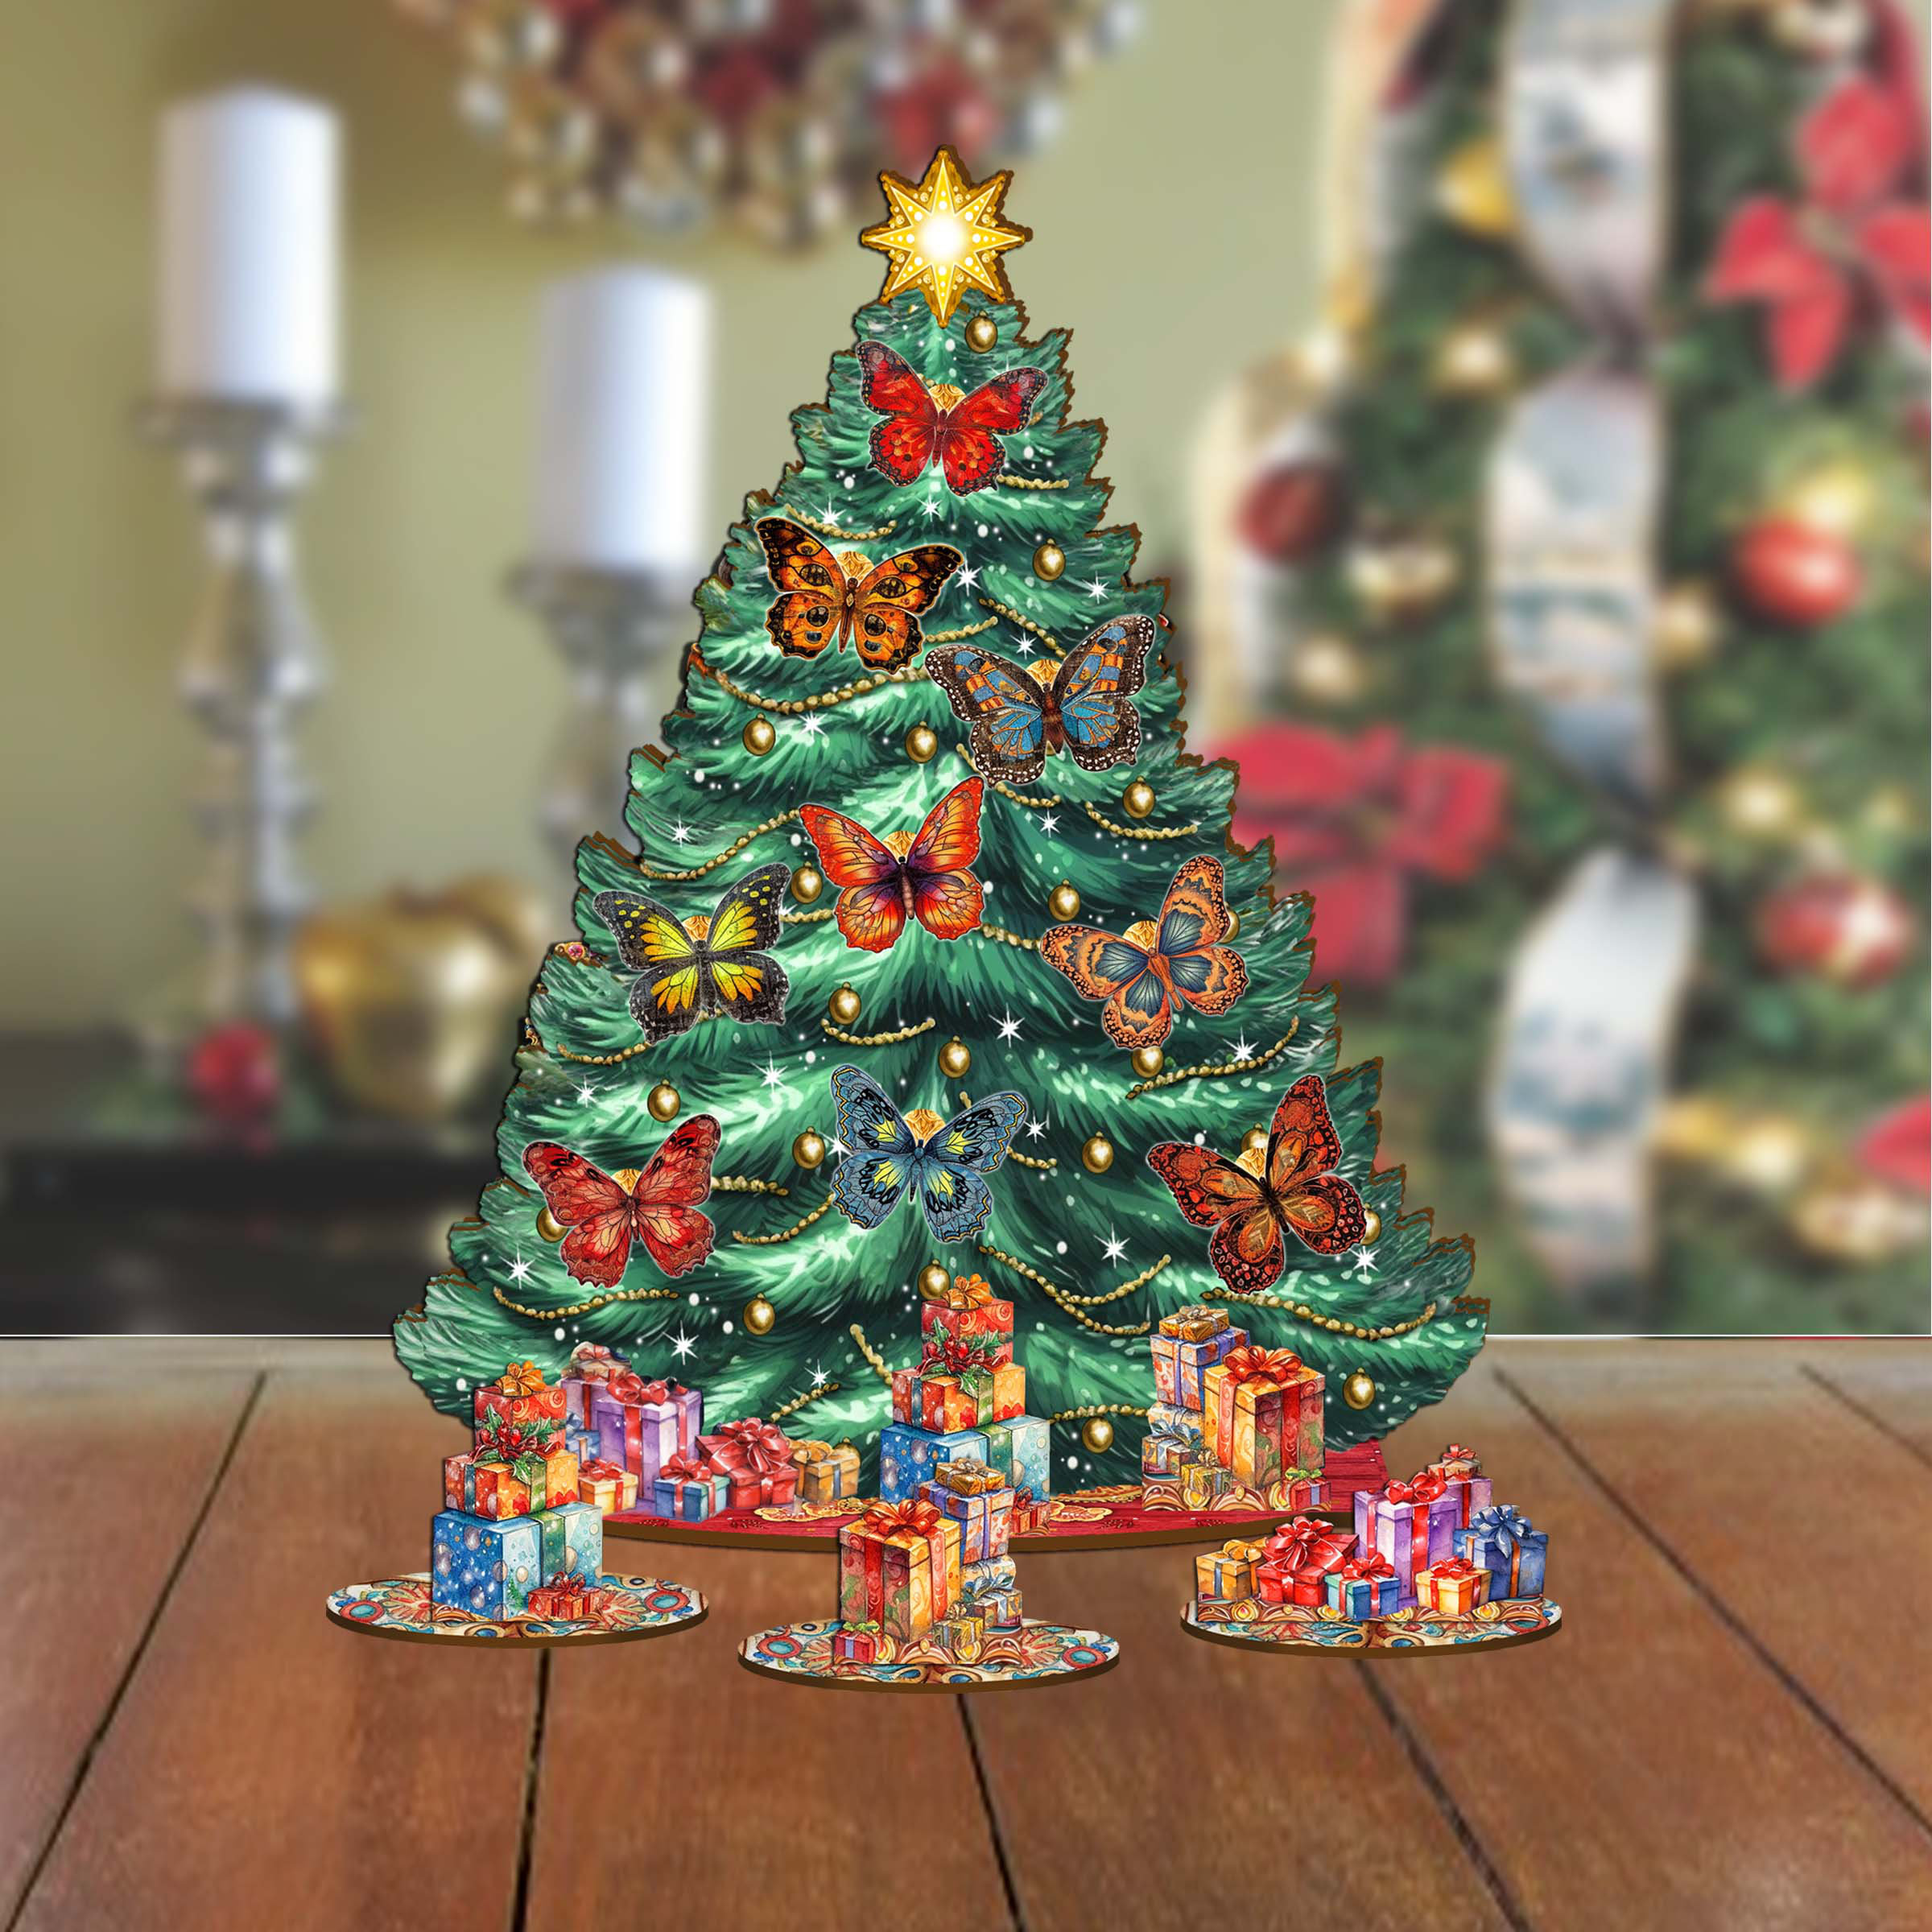 30 Most Beautiful Ceramic Christmas Trees - Christmas Celebrations   Vintage ceramic christmas tree, Ceramic christmas trees, Christmas tree  lighting